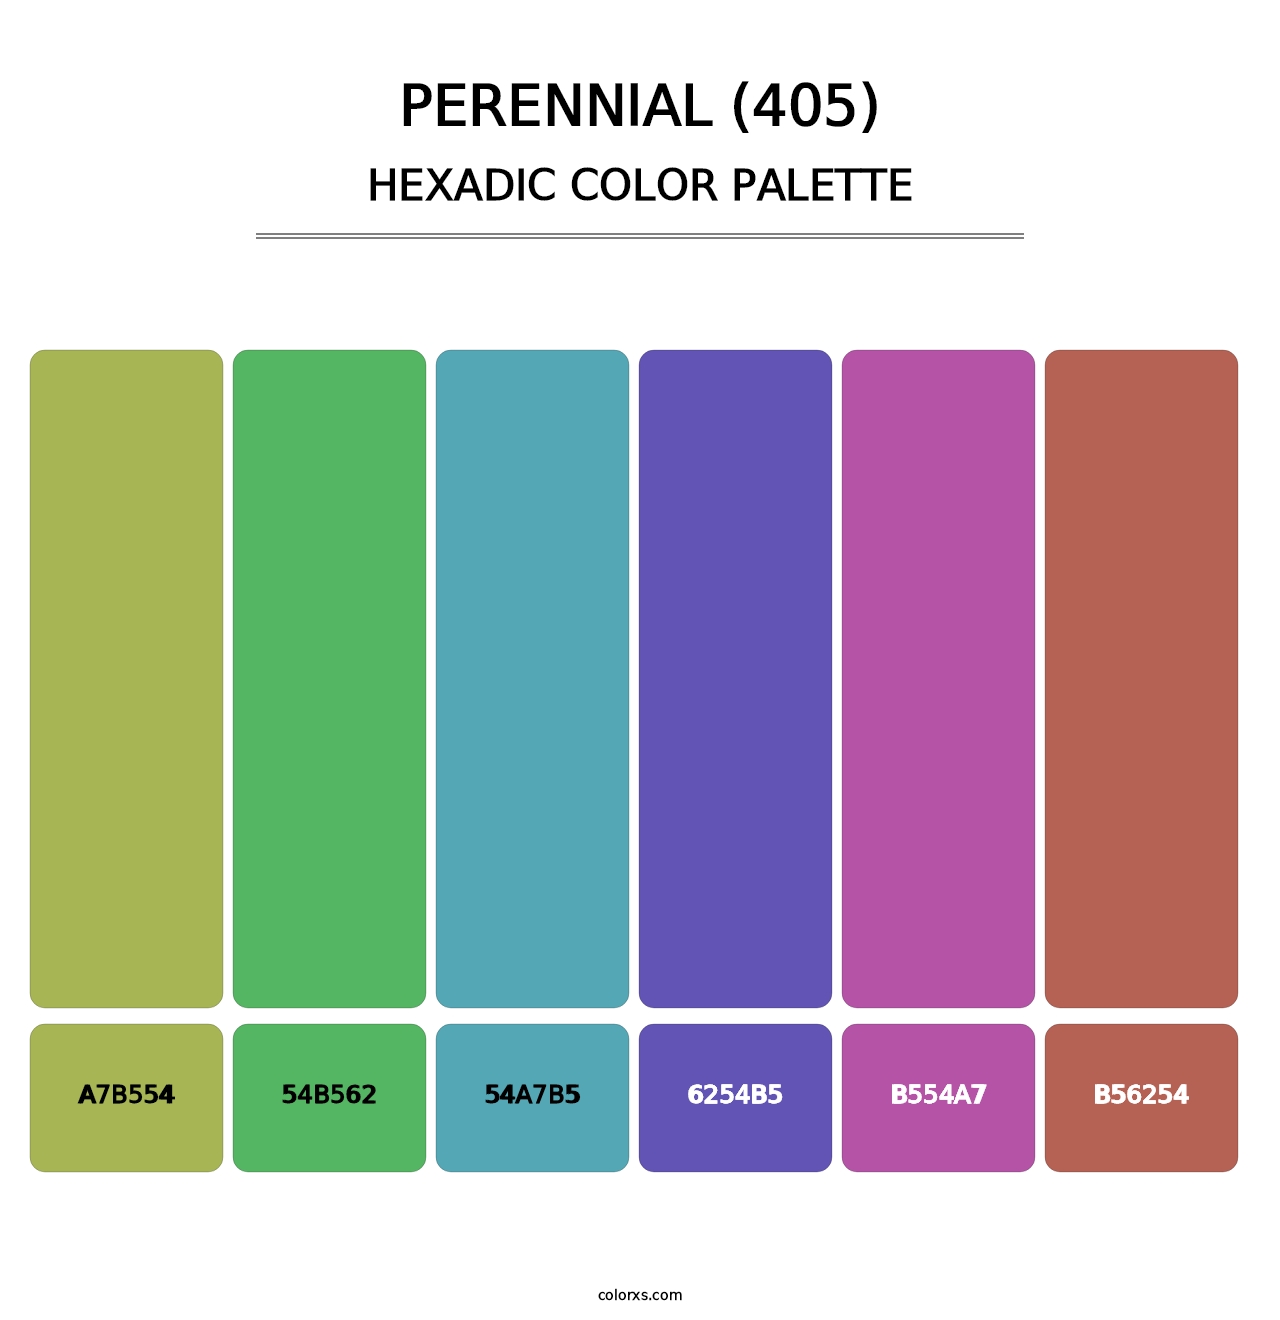 Perennial (405) - Hexadic Color Palette